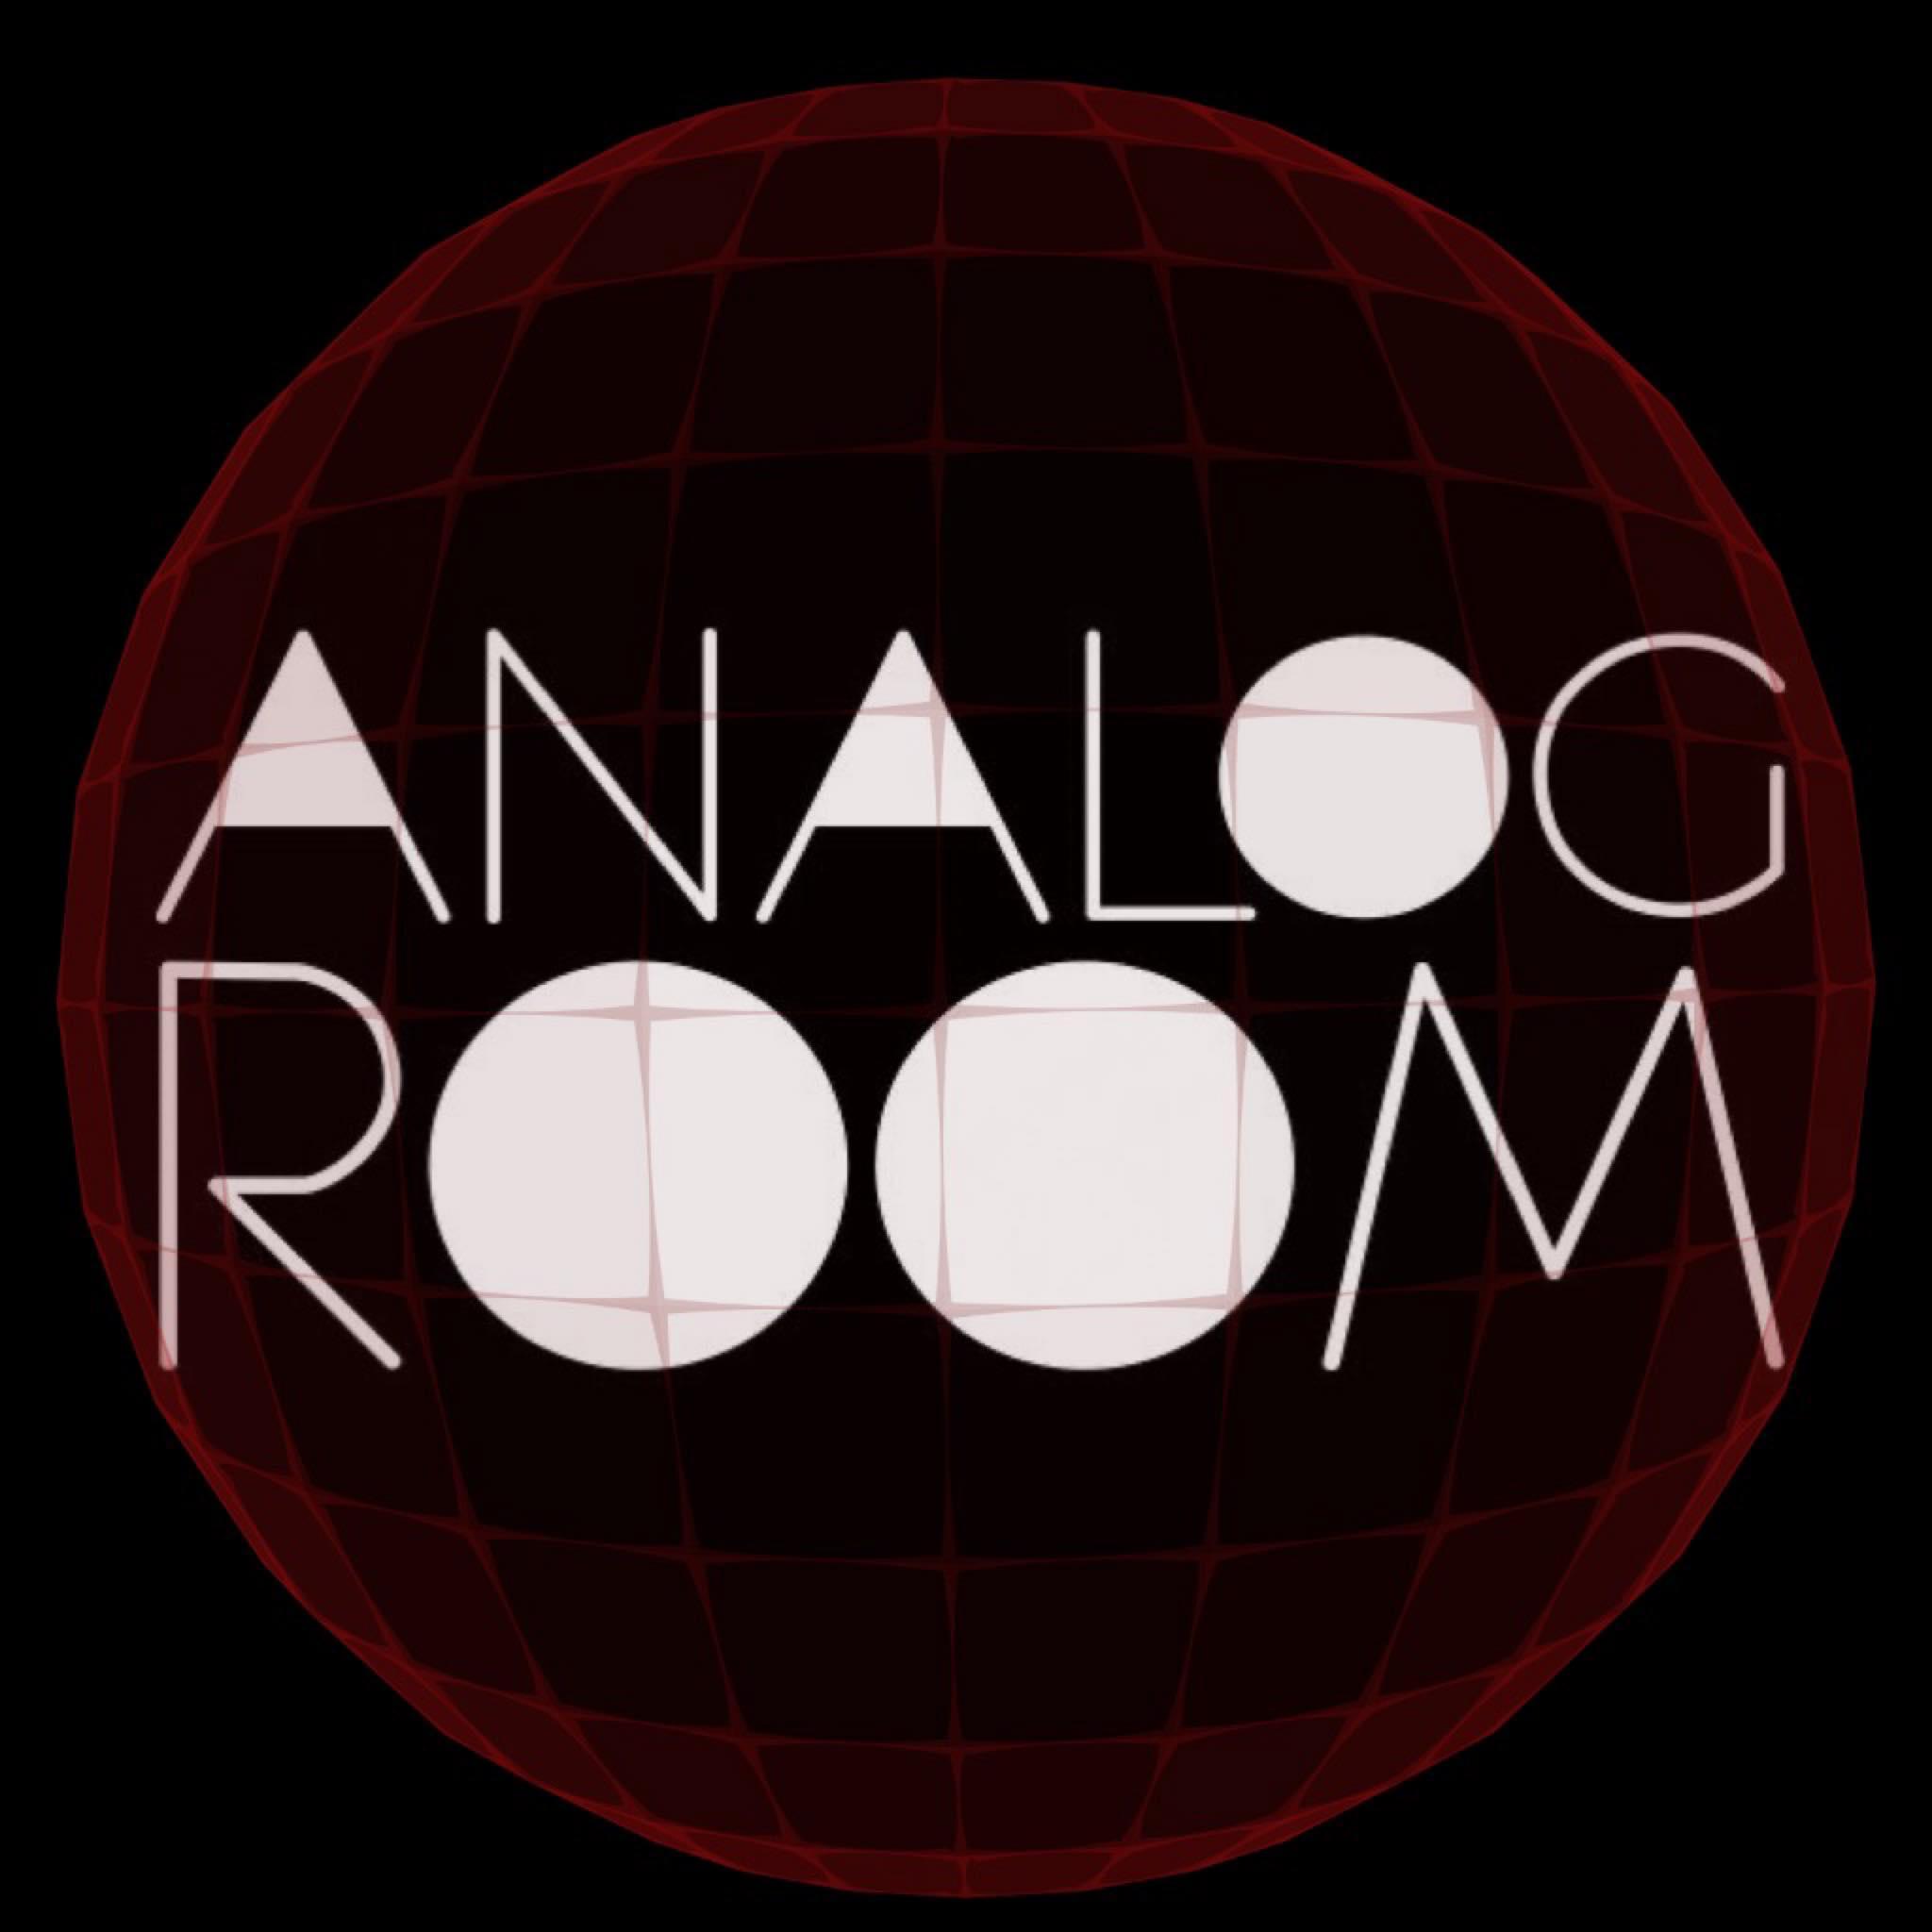 Analog Room pres. Roman Flügel - Siamak Amidi Maat - Ricardo D